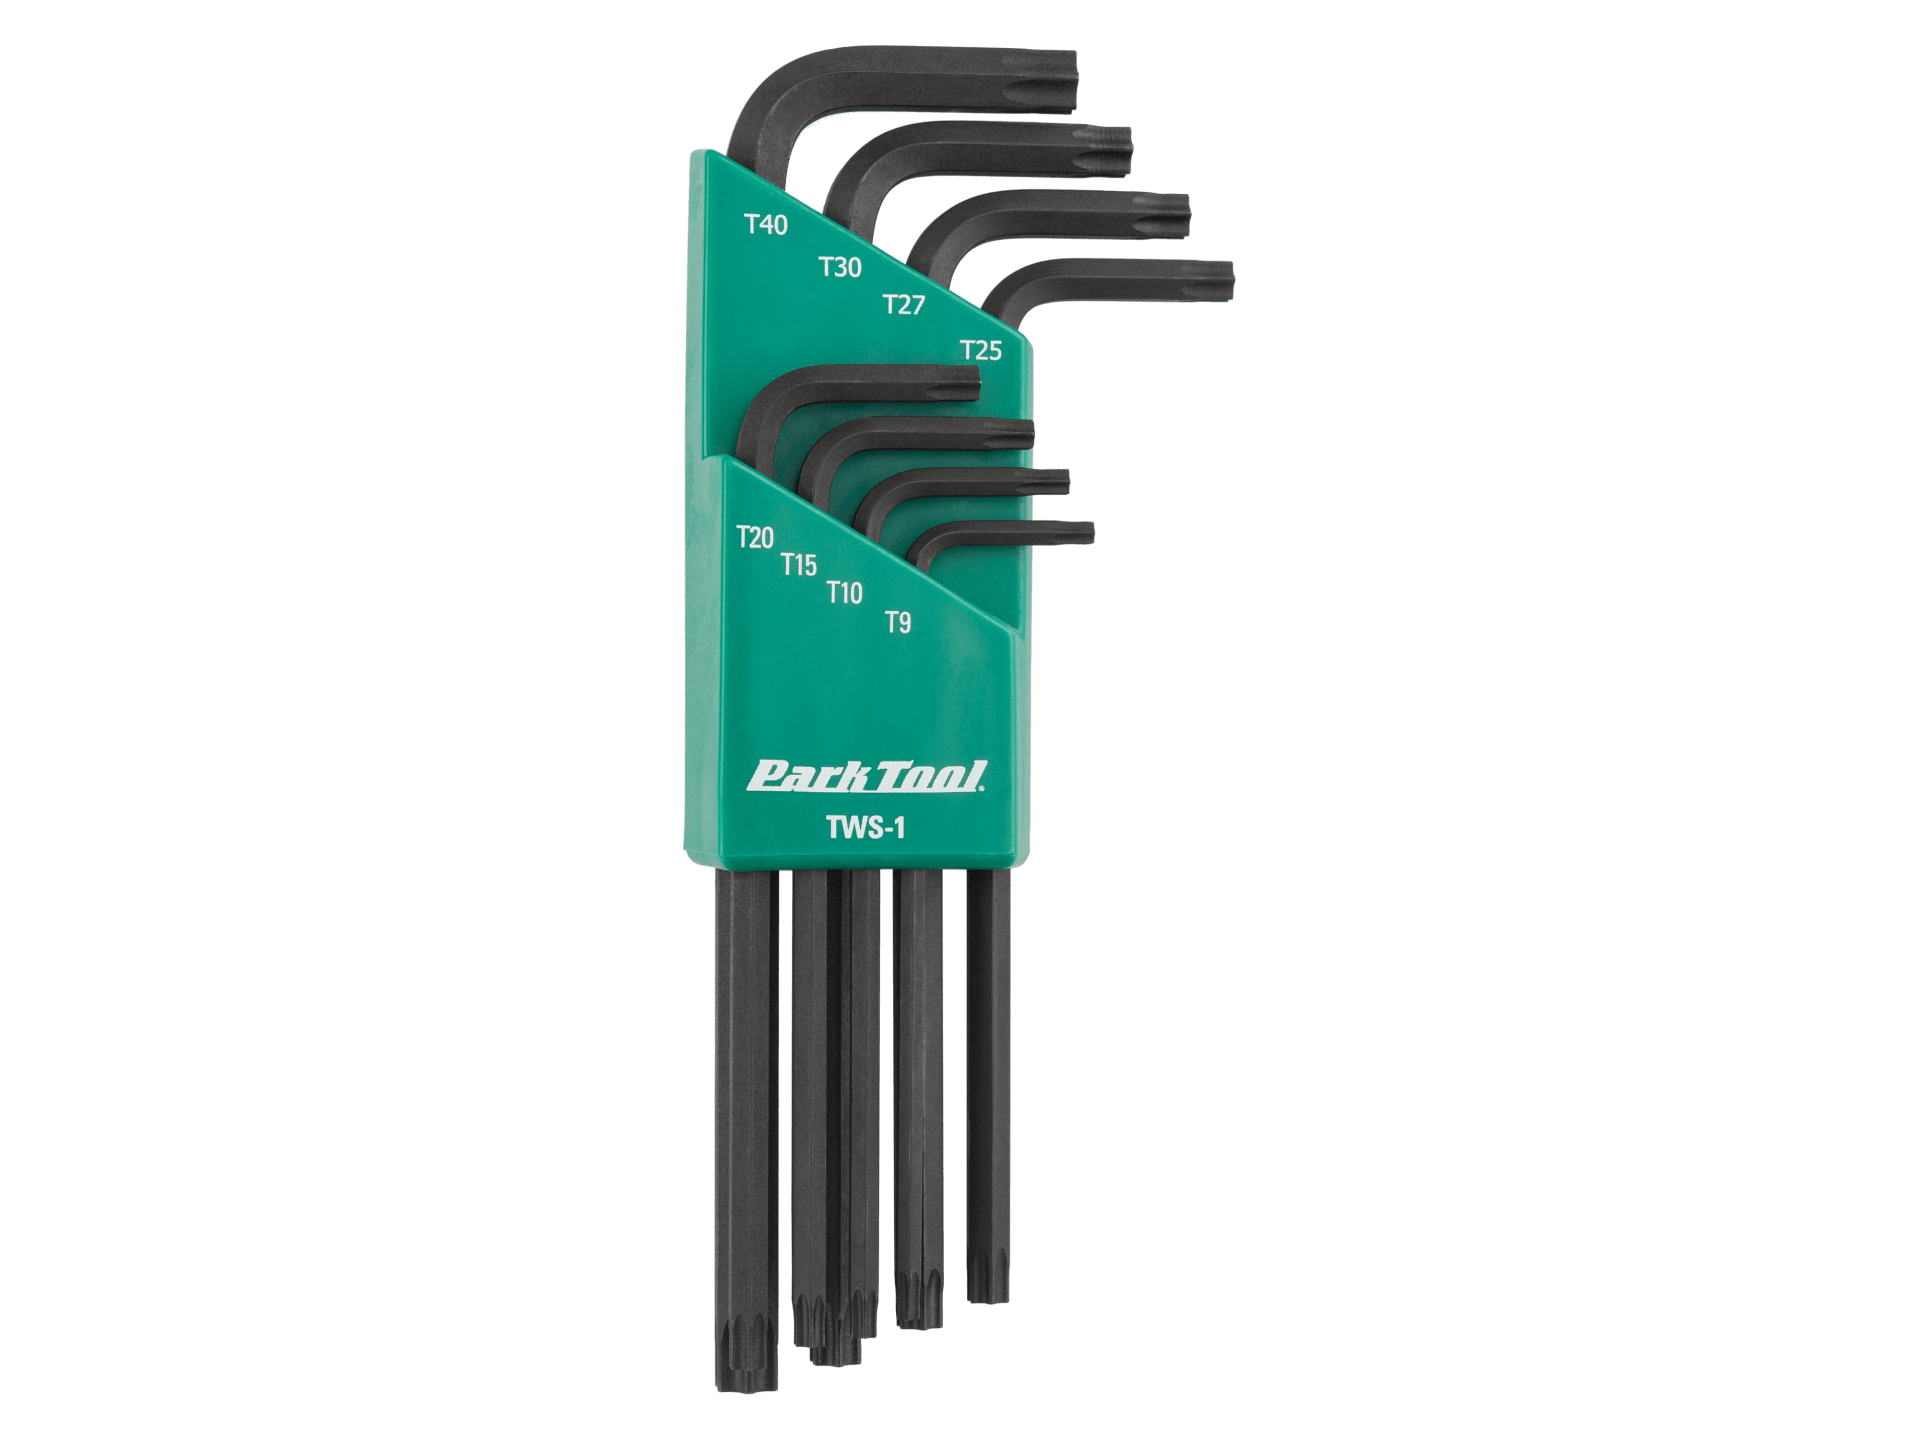 Park Tool TWS-1 Torx Wrench Set